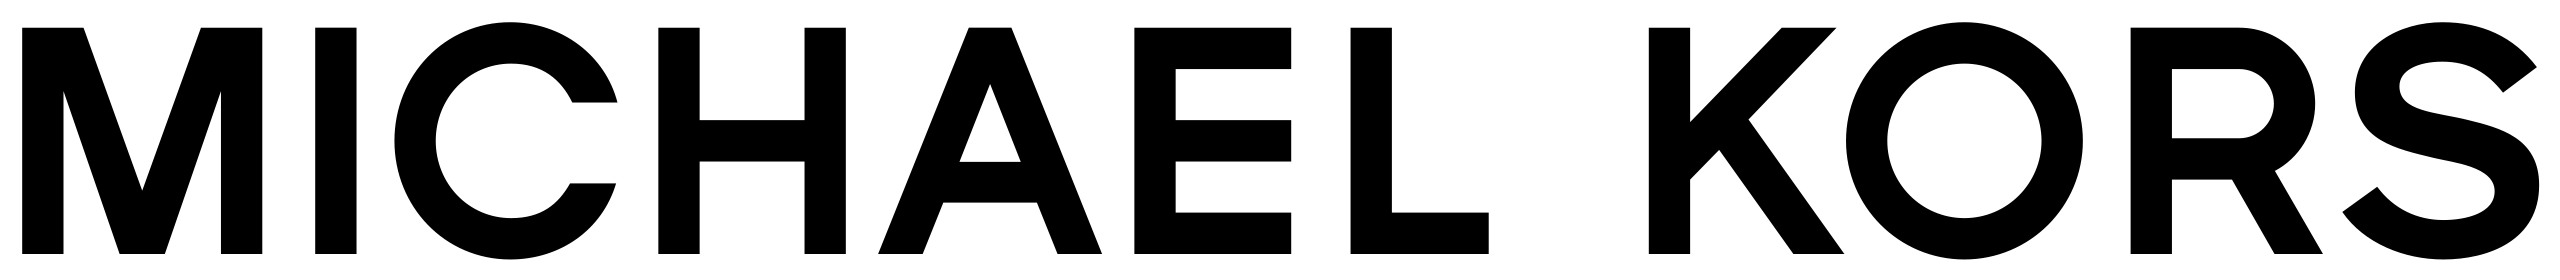 Michael_Kors_Logo.svg